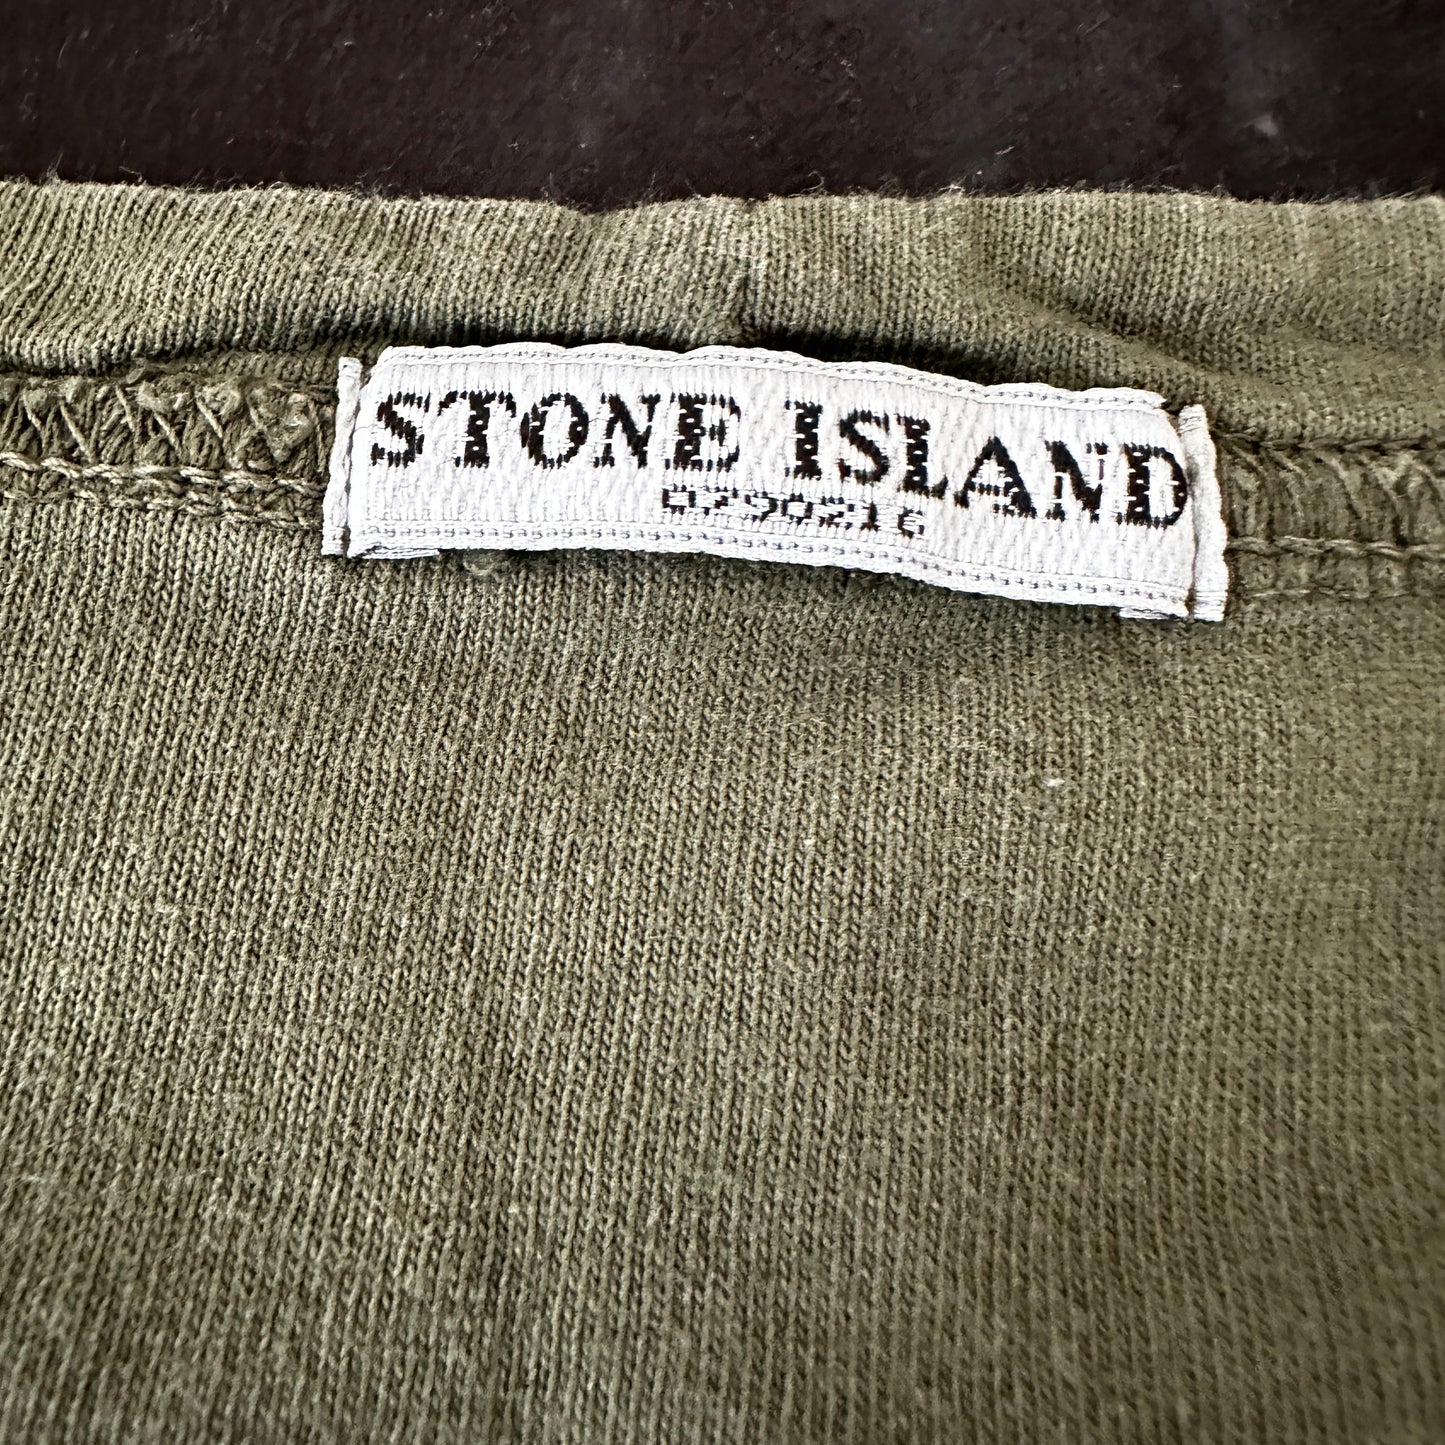 Stone Island Italy 2006 T-Shirt - XXL - Made in Italy